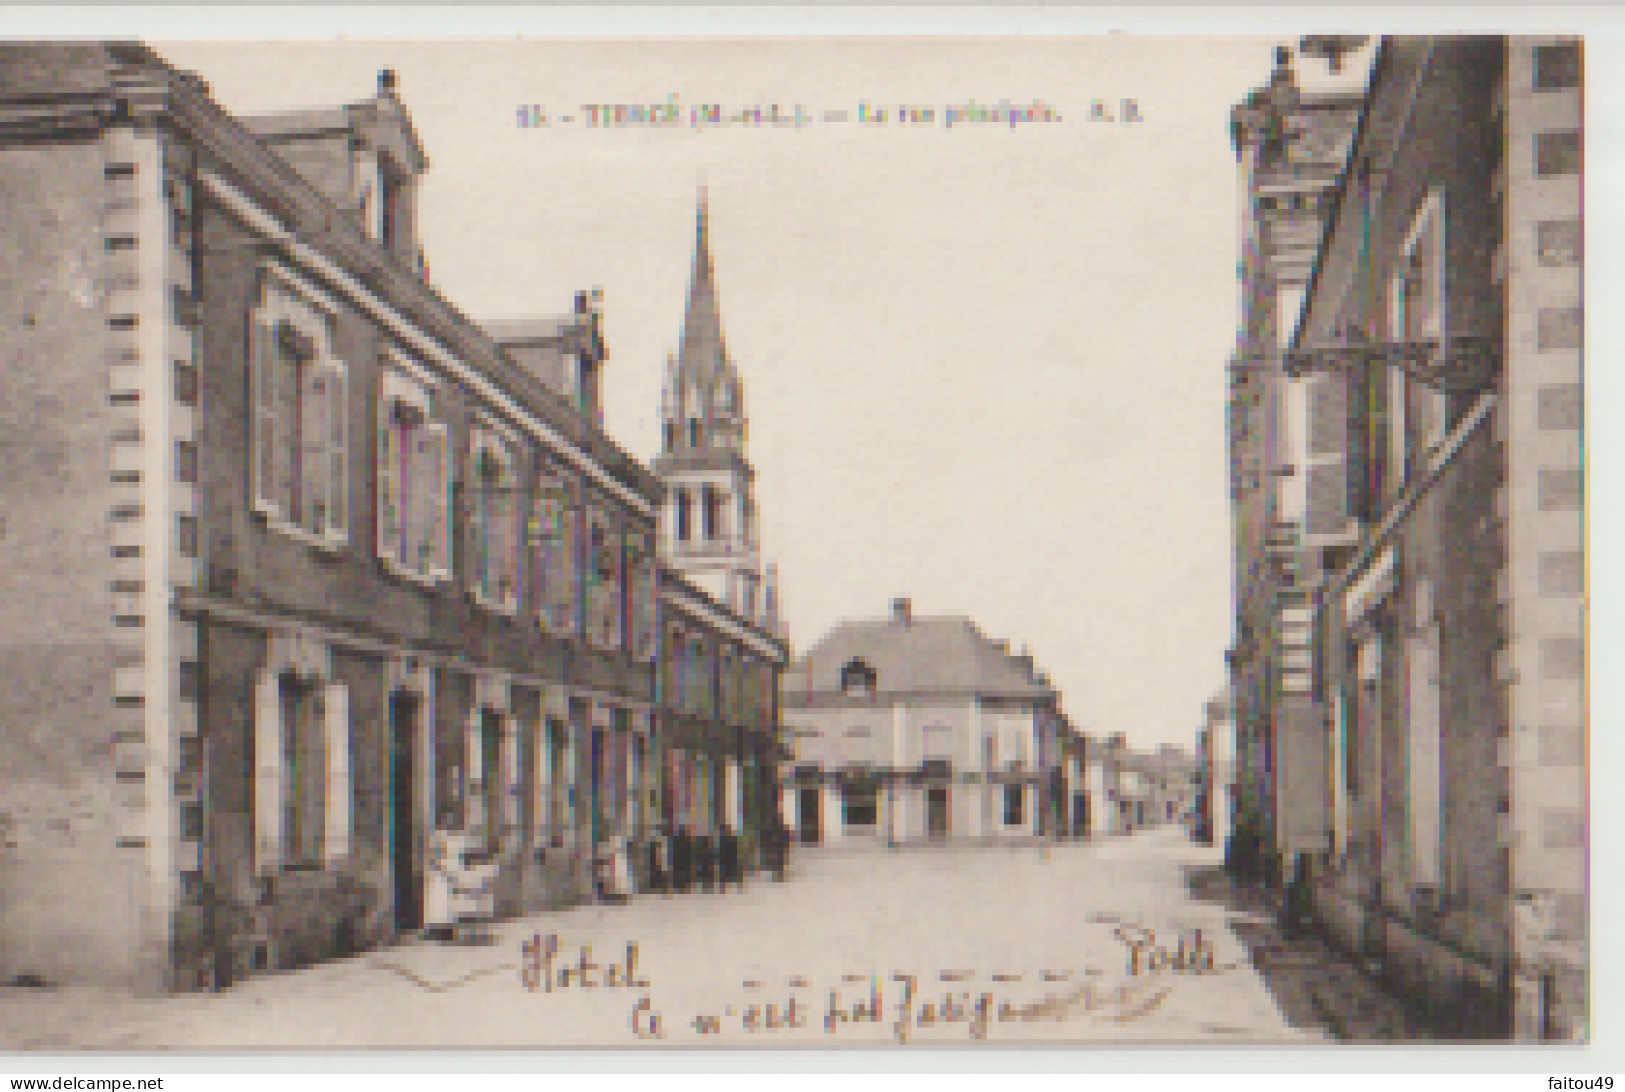 49 - TIERCE - La Rue Principale  138 - Tierce